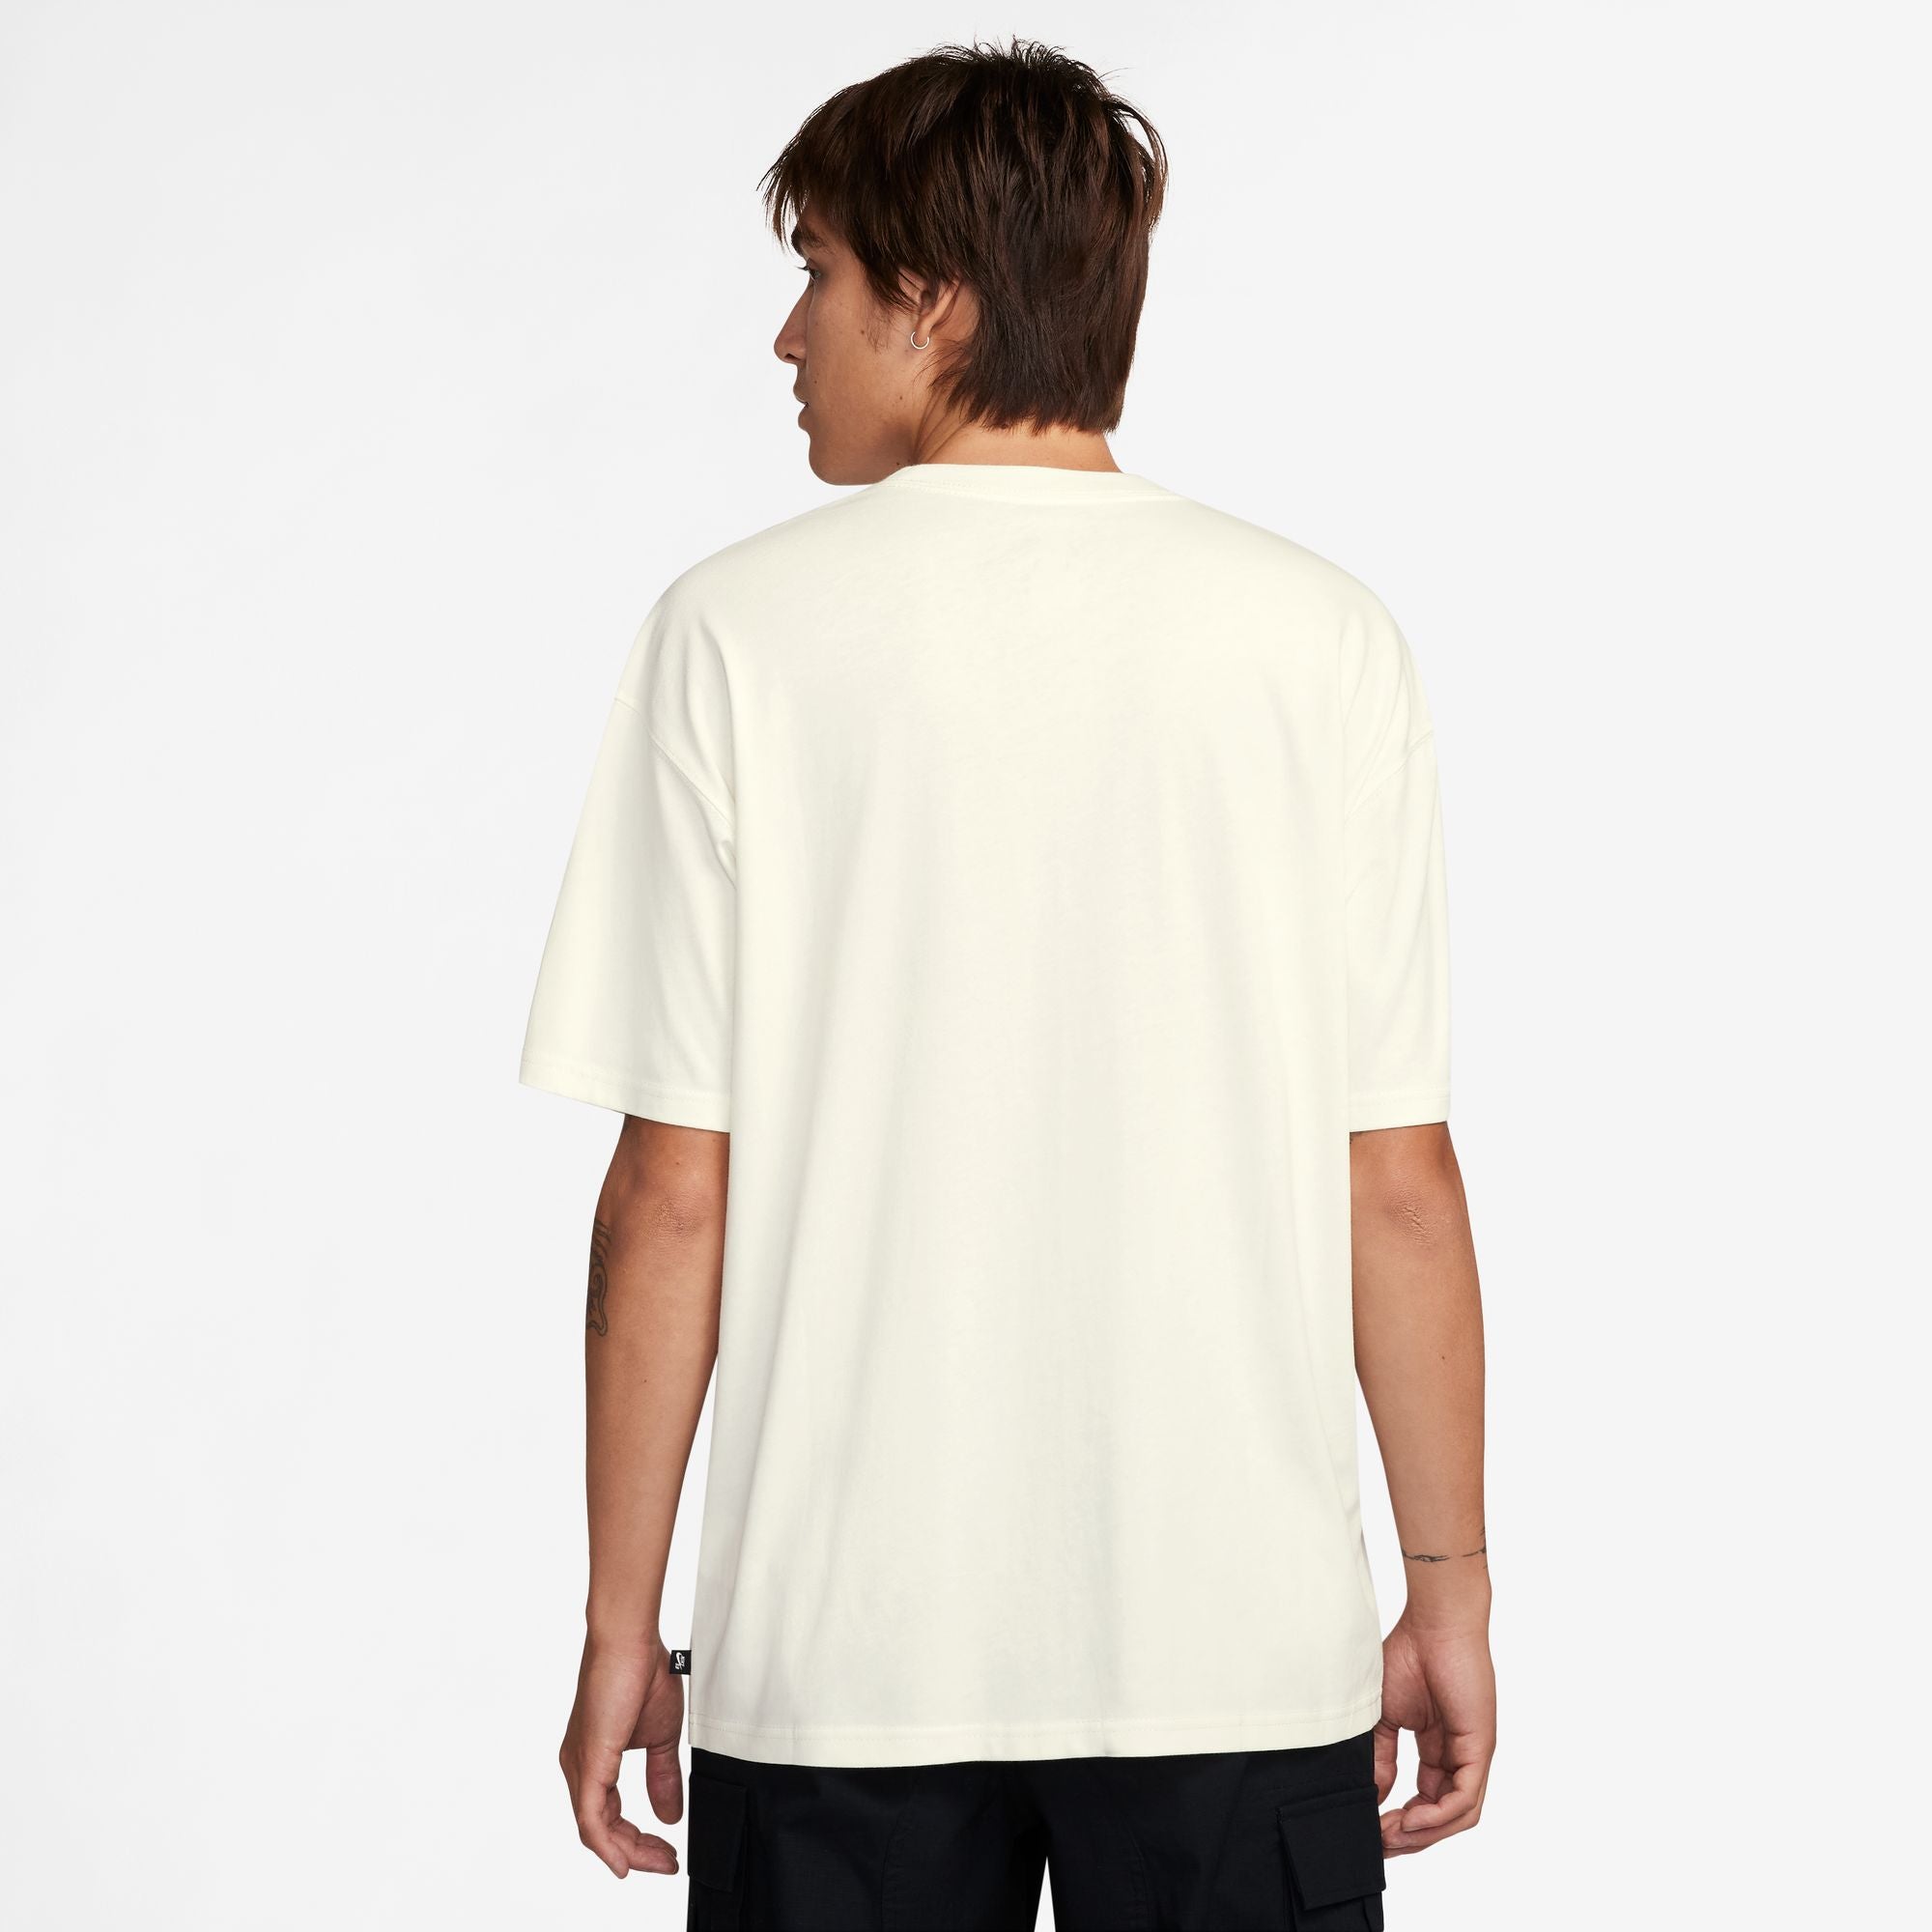 Nike SB Repeat T-shirt - Sail